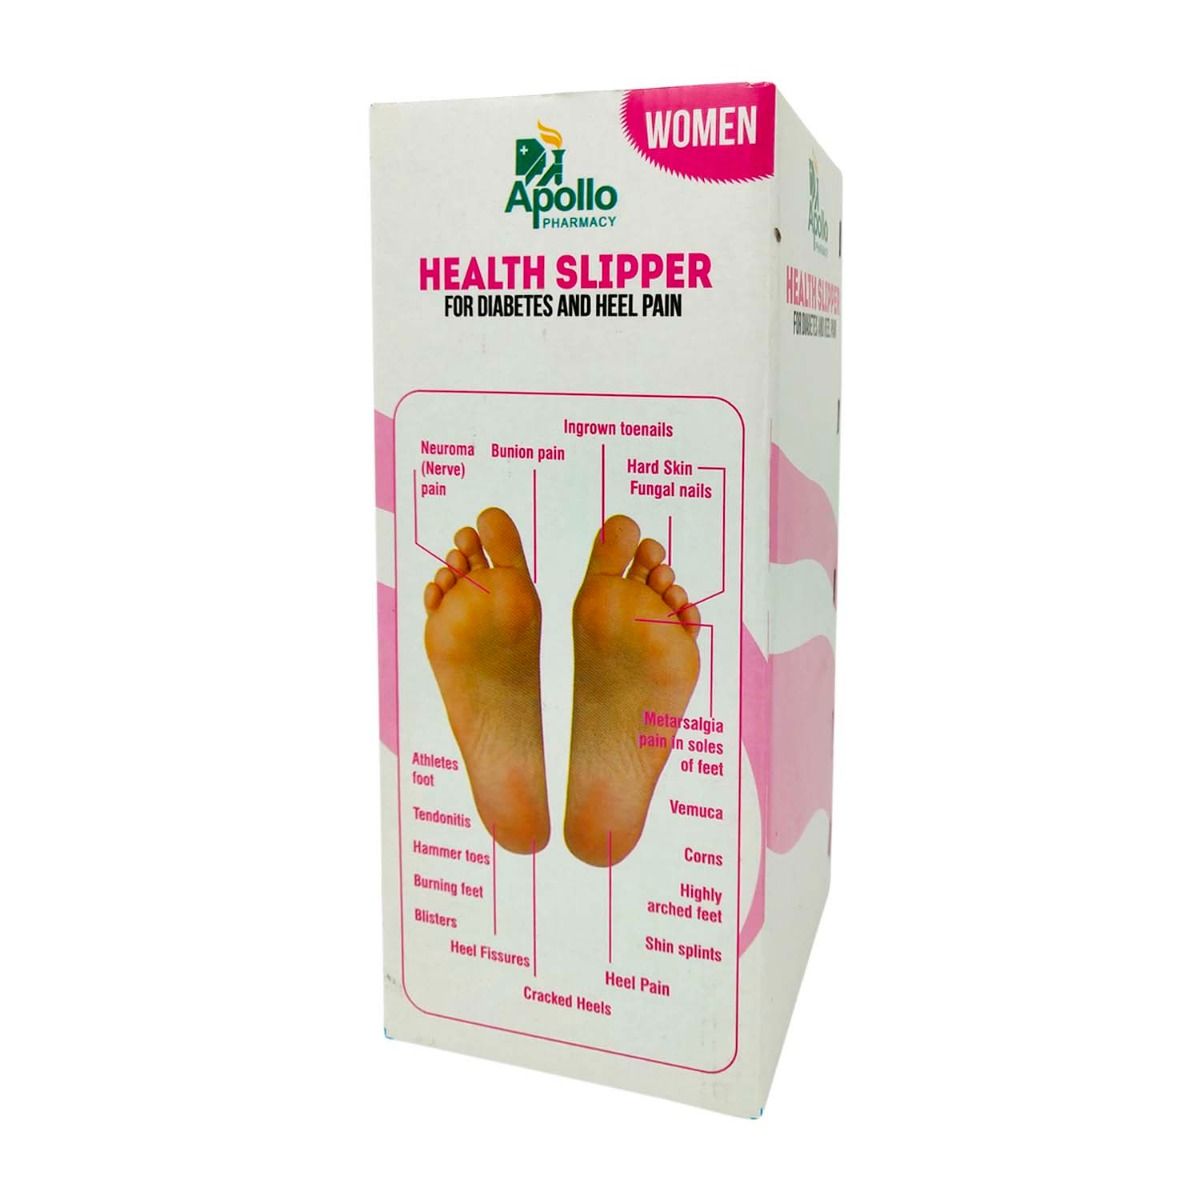 Apollo Pharmacy Diabetes & Heel Pain Health Slipper For Men, Size-11, 1 Pair, Pack of 1 